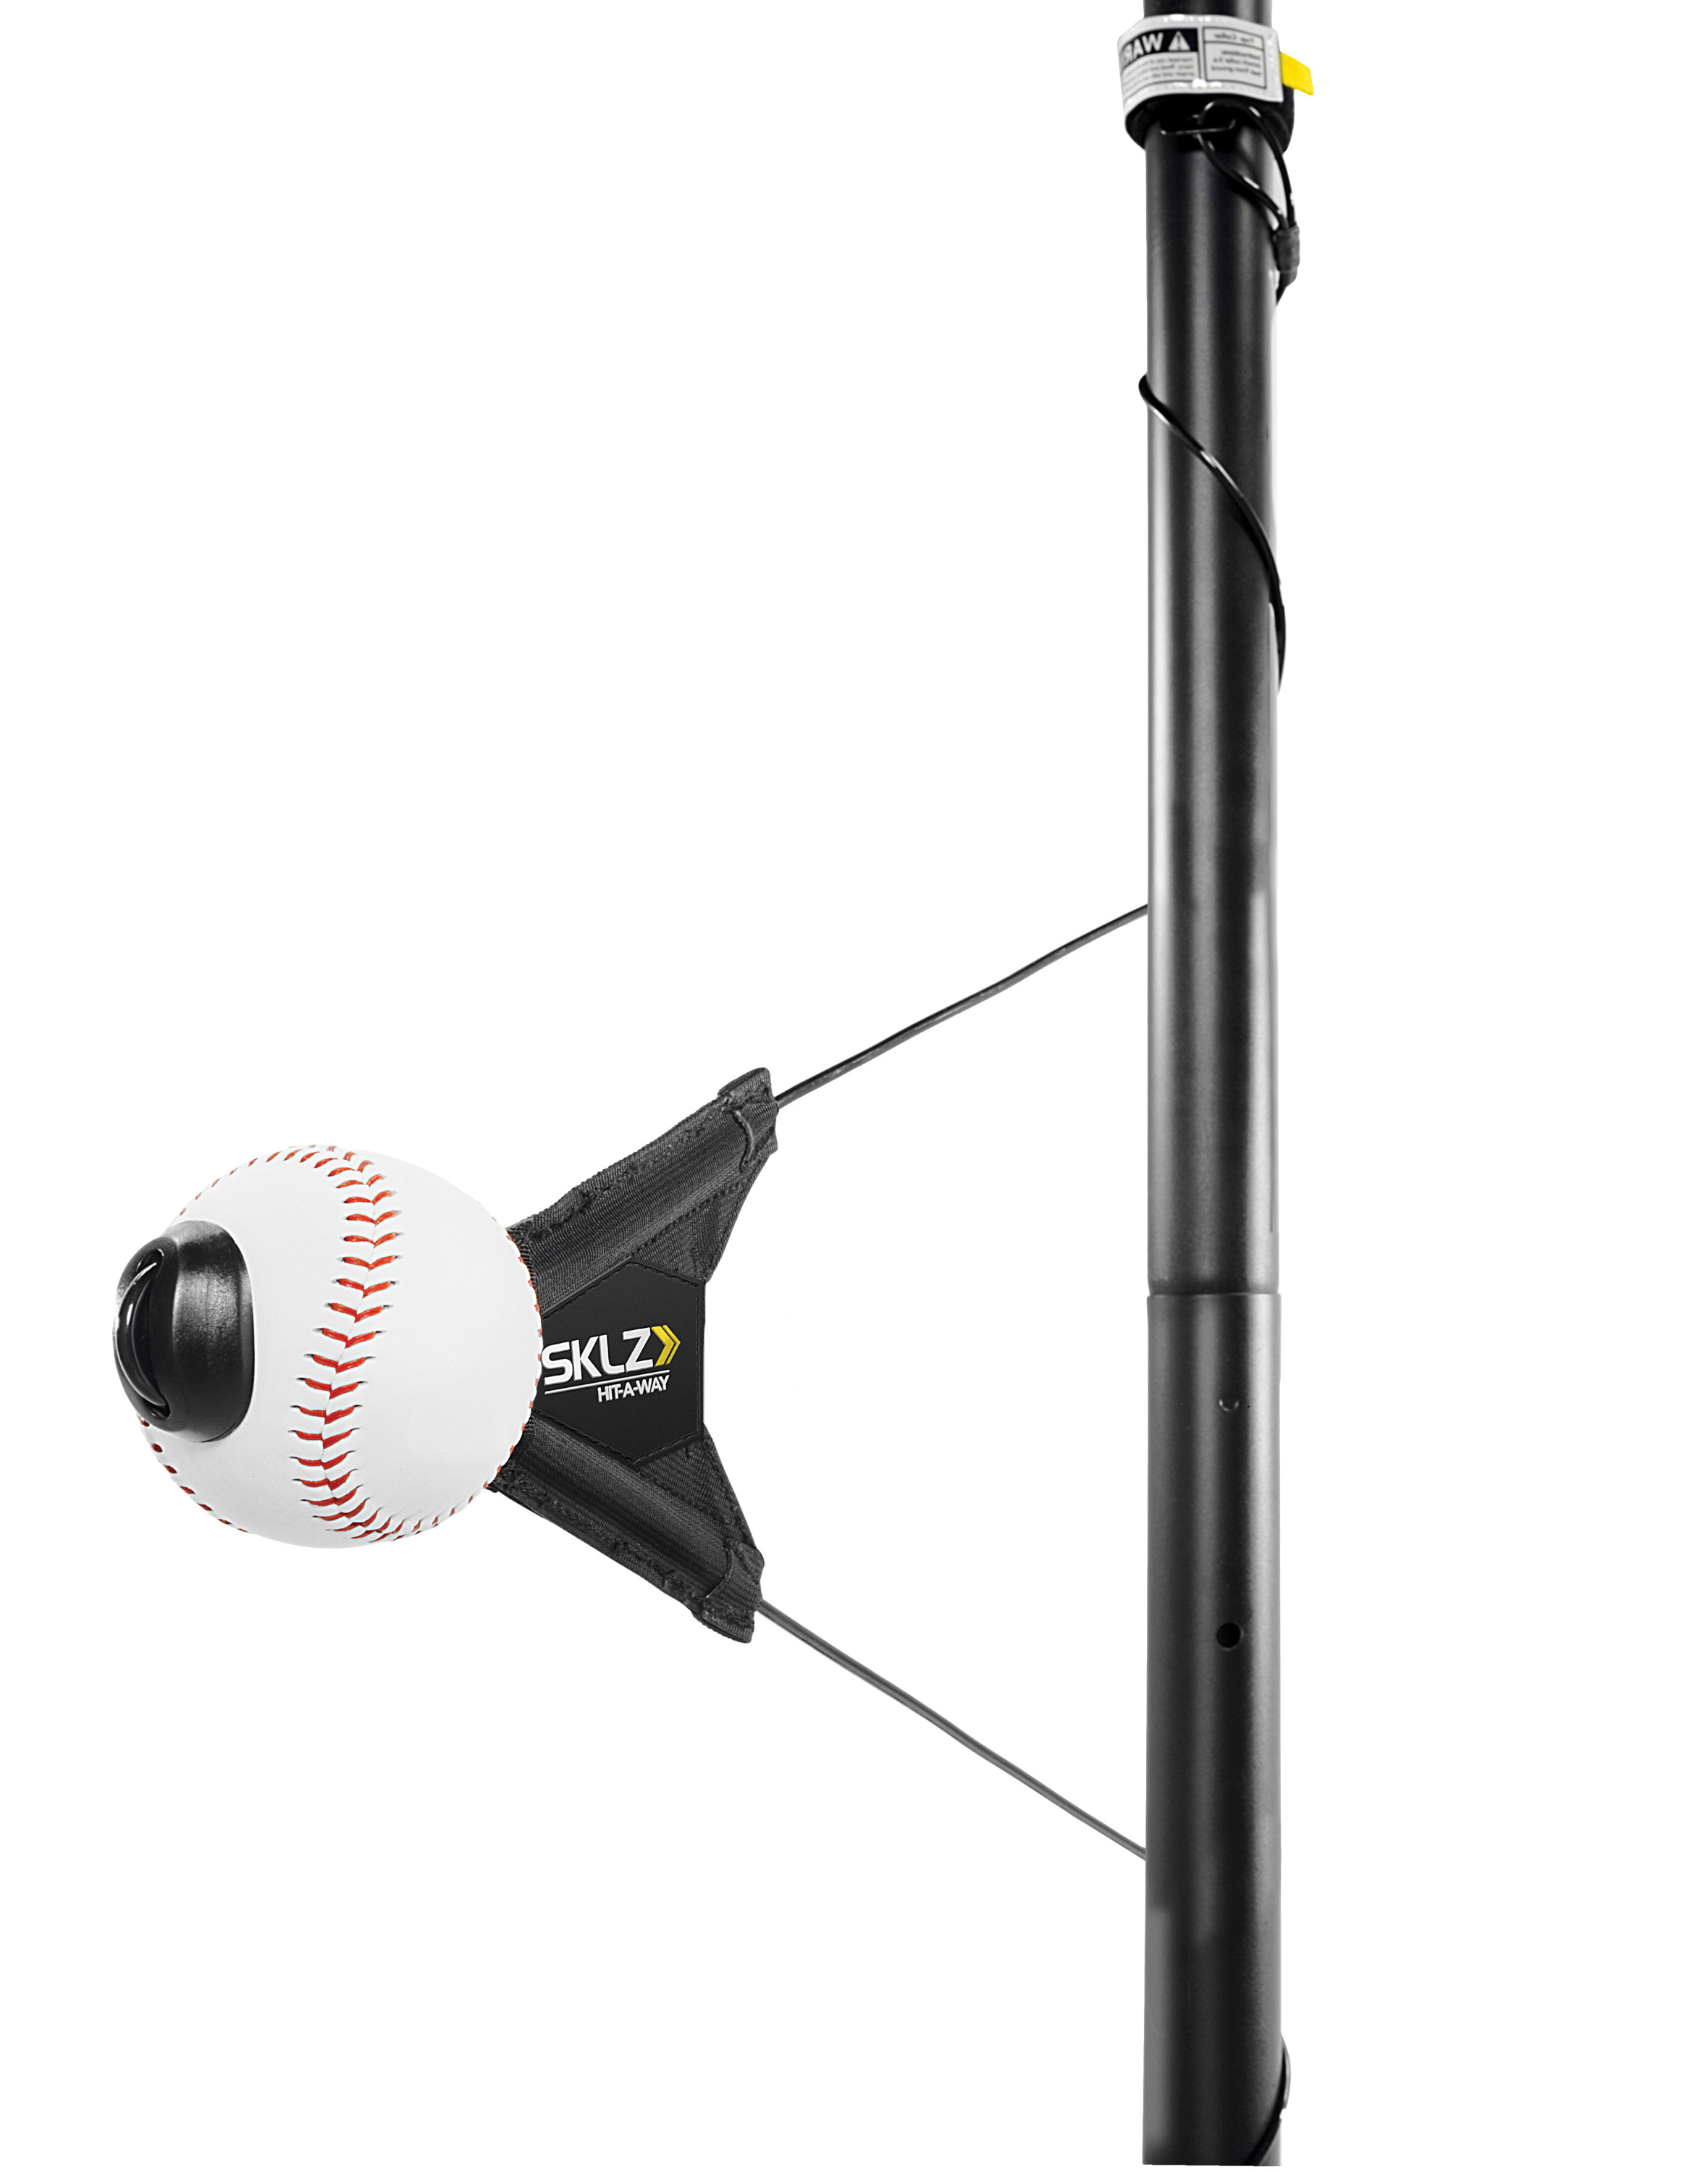 SKLZ Hit-a-Way Baseball Adjustable Swing Trainer - image 4 of 8